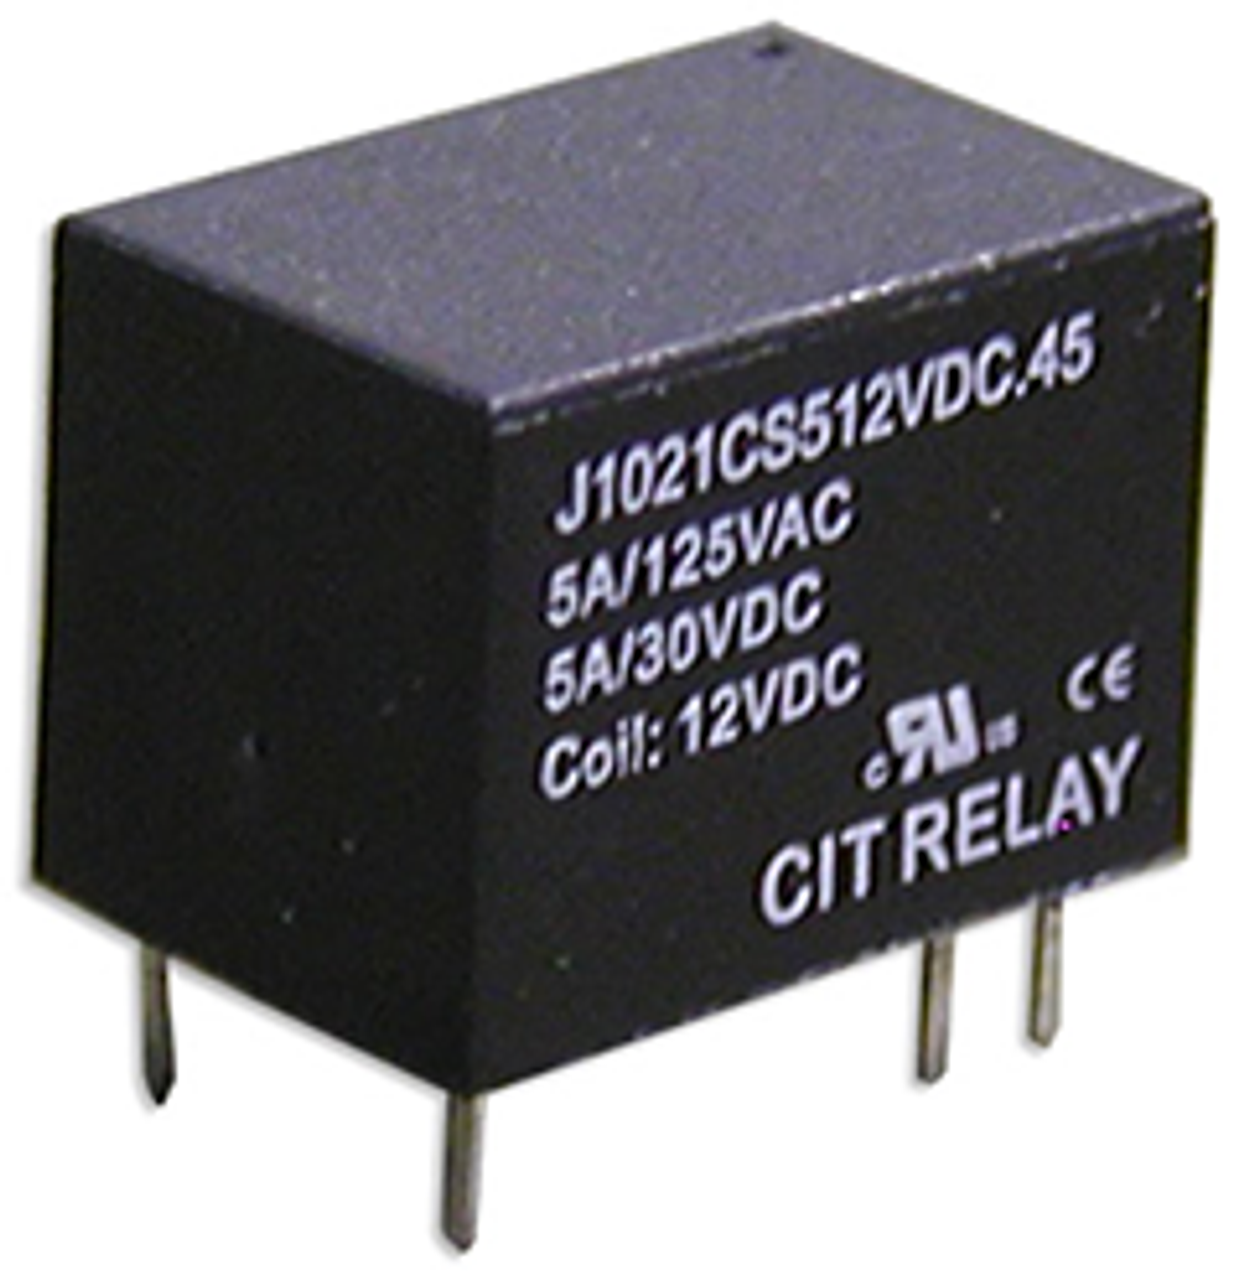 CIT Relay and Switch J1021CS124VDC.45 Signal Relays